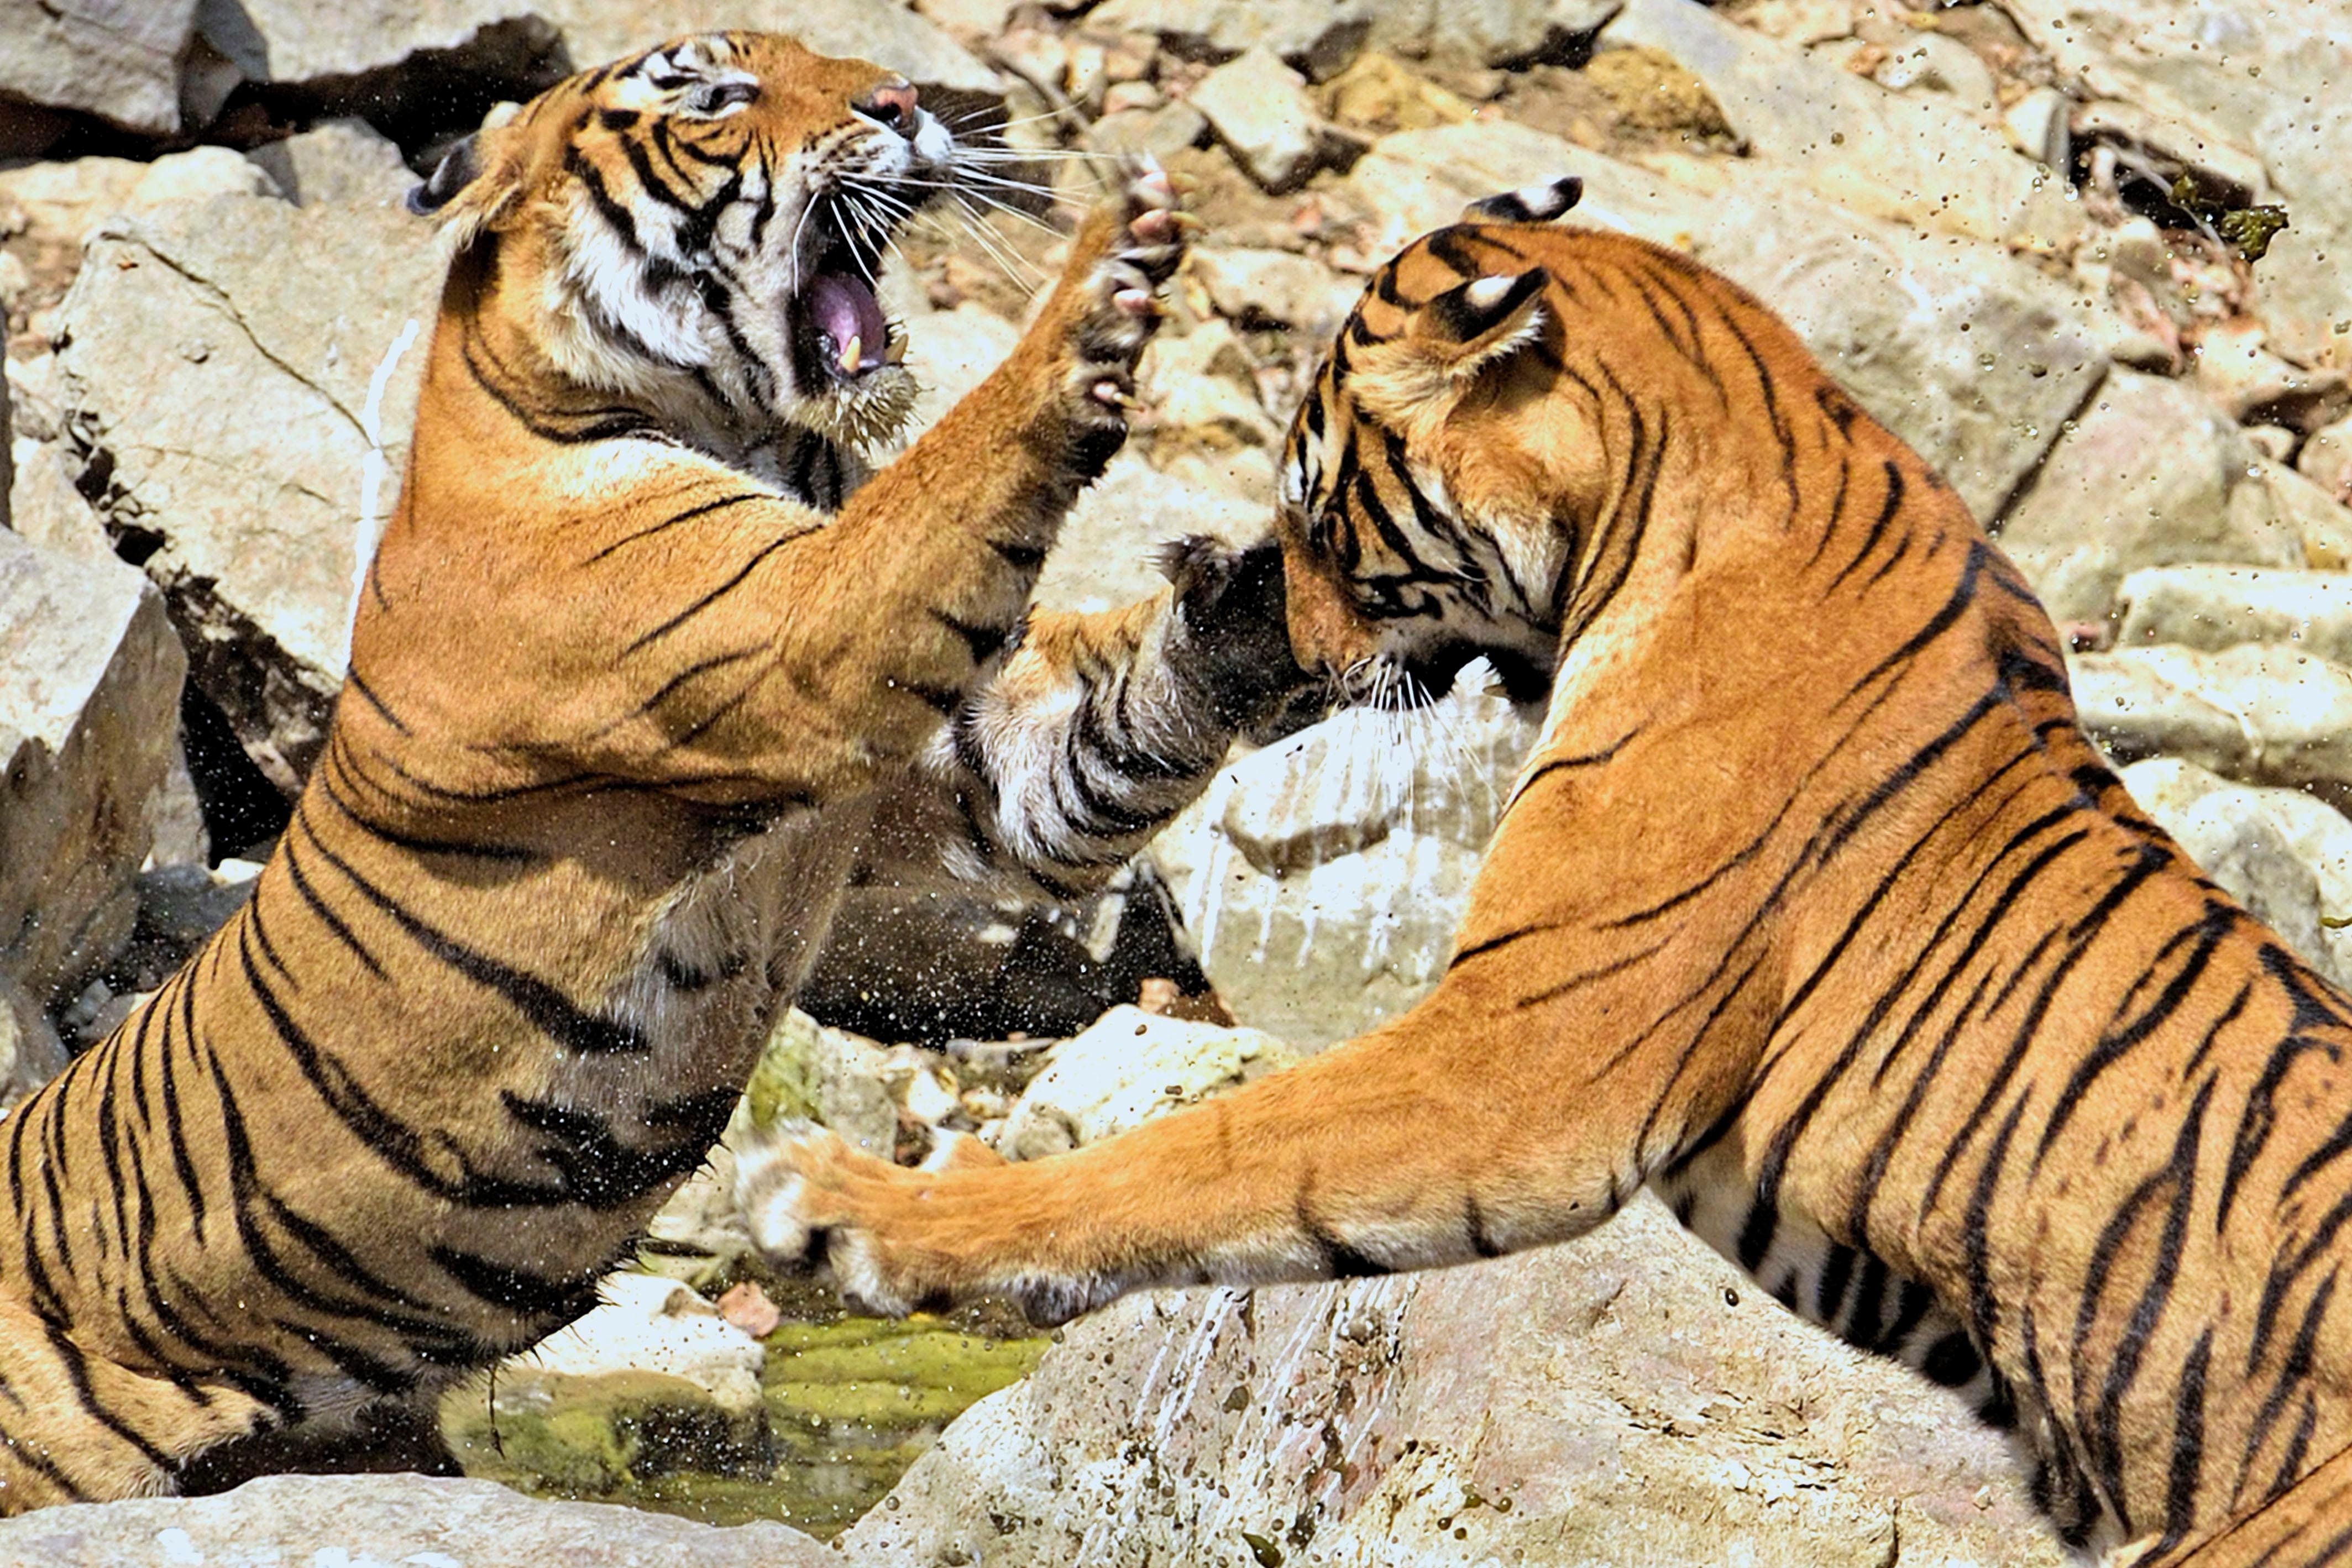 Зоопарк 1 видео. Тигры дерутся. Драка тигров. Тигрица. Два тигра дерутся.